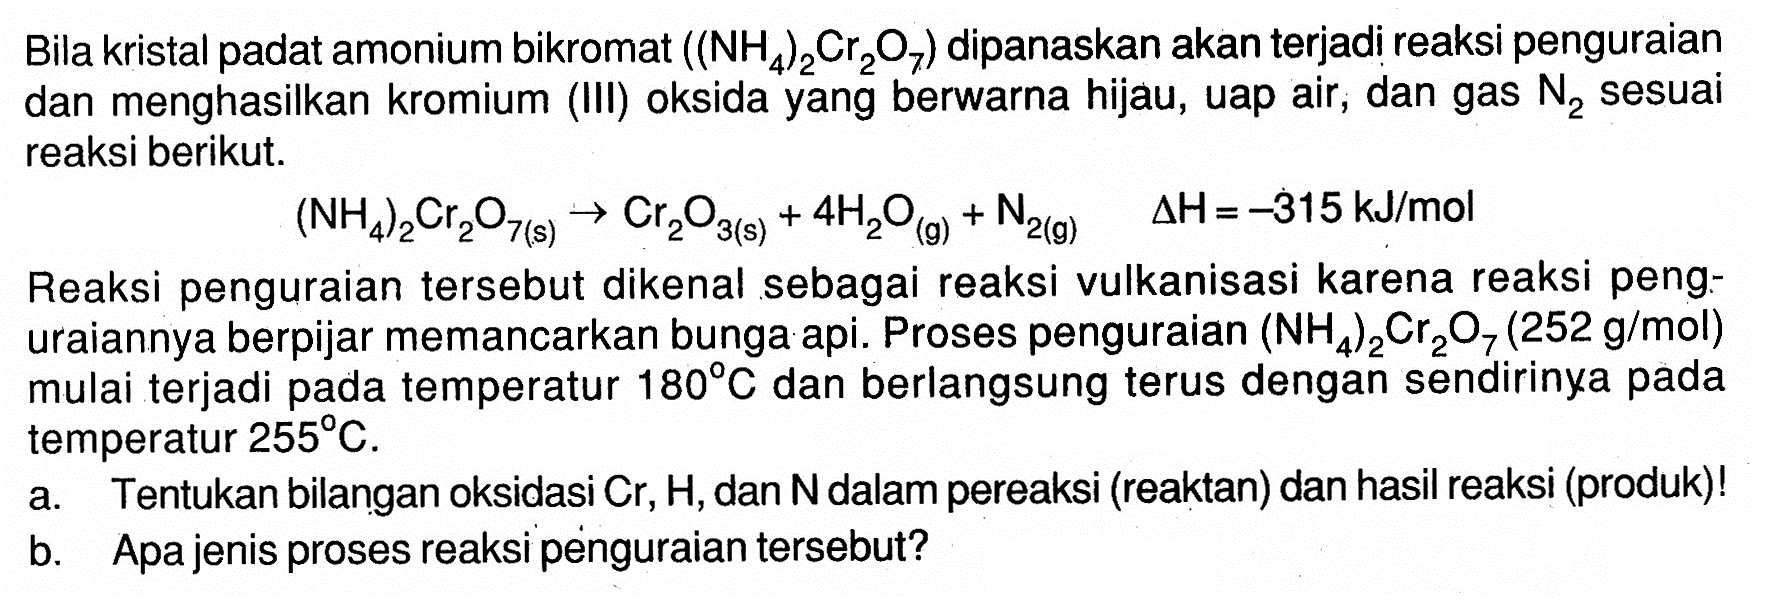 Bila kristal padat amonium bikromat (NH4)2Cr2O7 dipanaskan akan terjadi reaksi penguraian dan menghasilkan kromium (III) oksida yang berwarna hijau, uap air, dan gas N2 sesuai reaksi berikut.
(NH4)2Cr2O7 (s)  - > Cr2O3 (s) + 4 H2O (g) + N2 (g) delta H=-315 kJ/mol Reaksi penguraian tersebut dikenal sebagai reaksi vulkanisasi karena reaksi penguraiannya berpijar memancarkan bunga api. Proses penguraian (NH4)2Cr2O7 (252 g/mol) mulai terjadi pada temperatur 180 C dan berlangsung terus dengan sendirinya pada temperatur 255 C. a. Tentukan bilangan oksidasi Cr, H , dan N dalam pereaksi (reaktan) dan hasil reaksi (produk)! b. Apa jenis proses reaksi penguraian tersebut? 